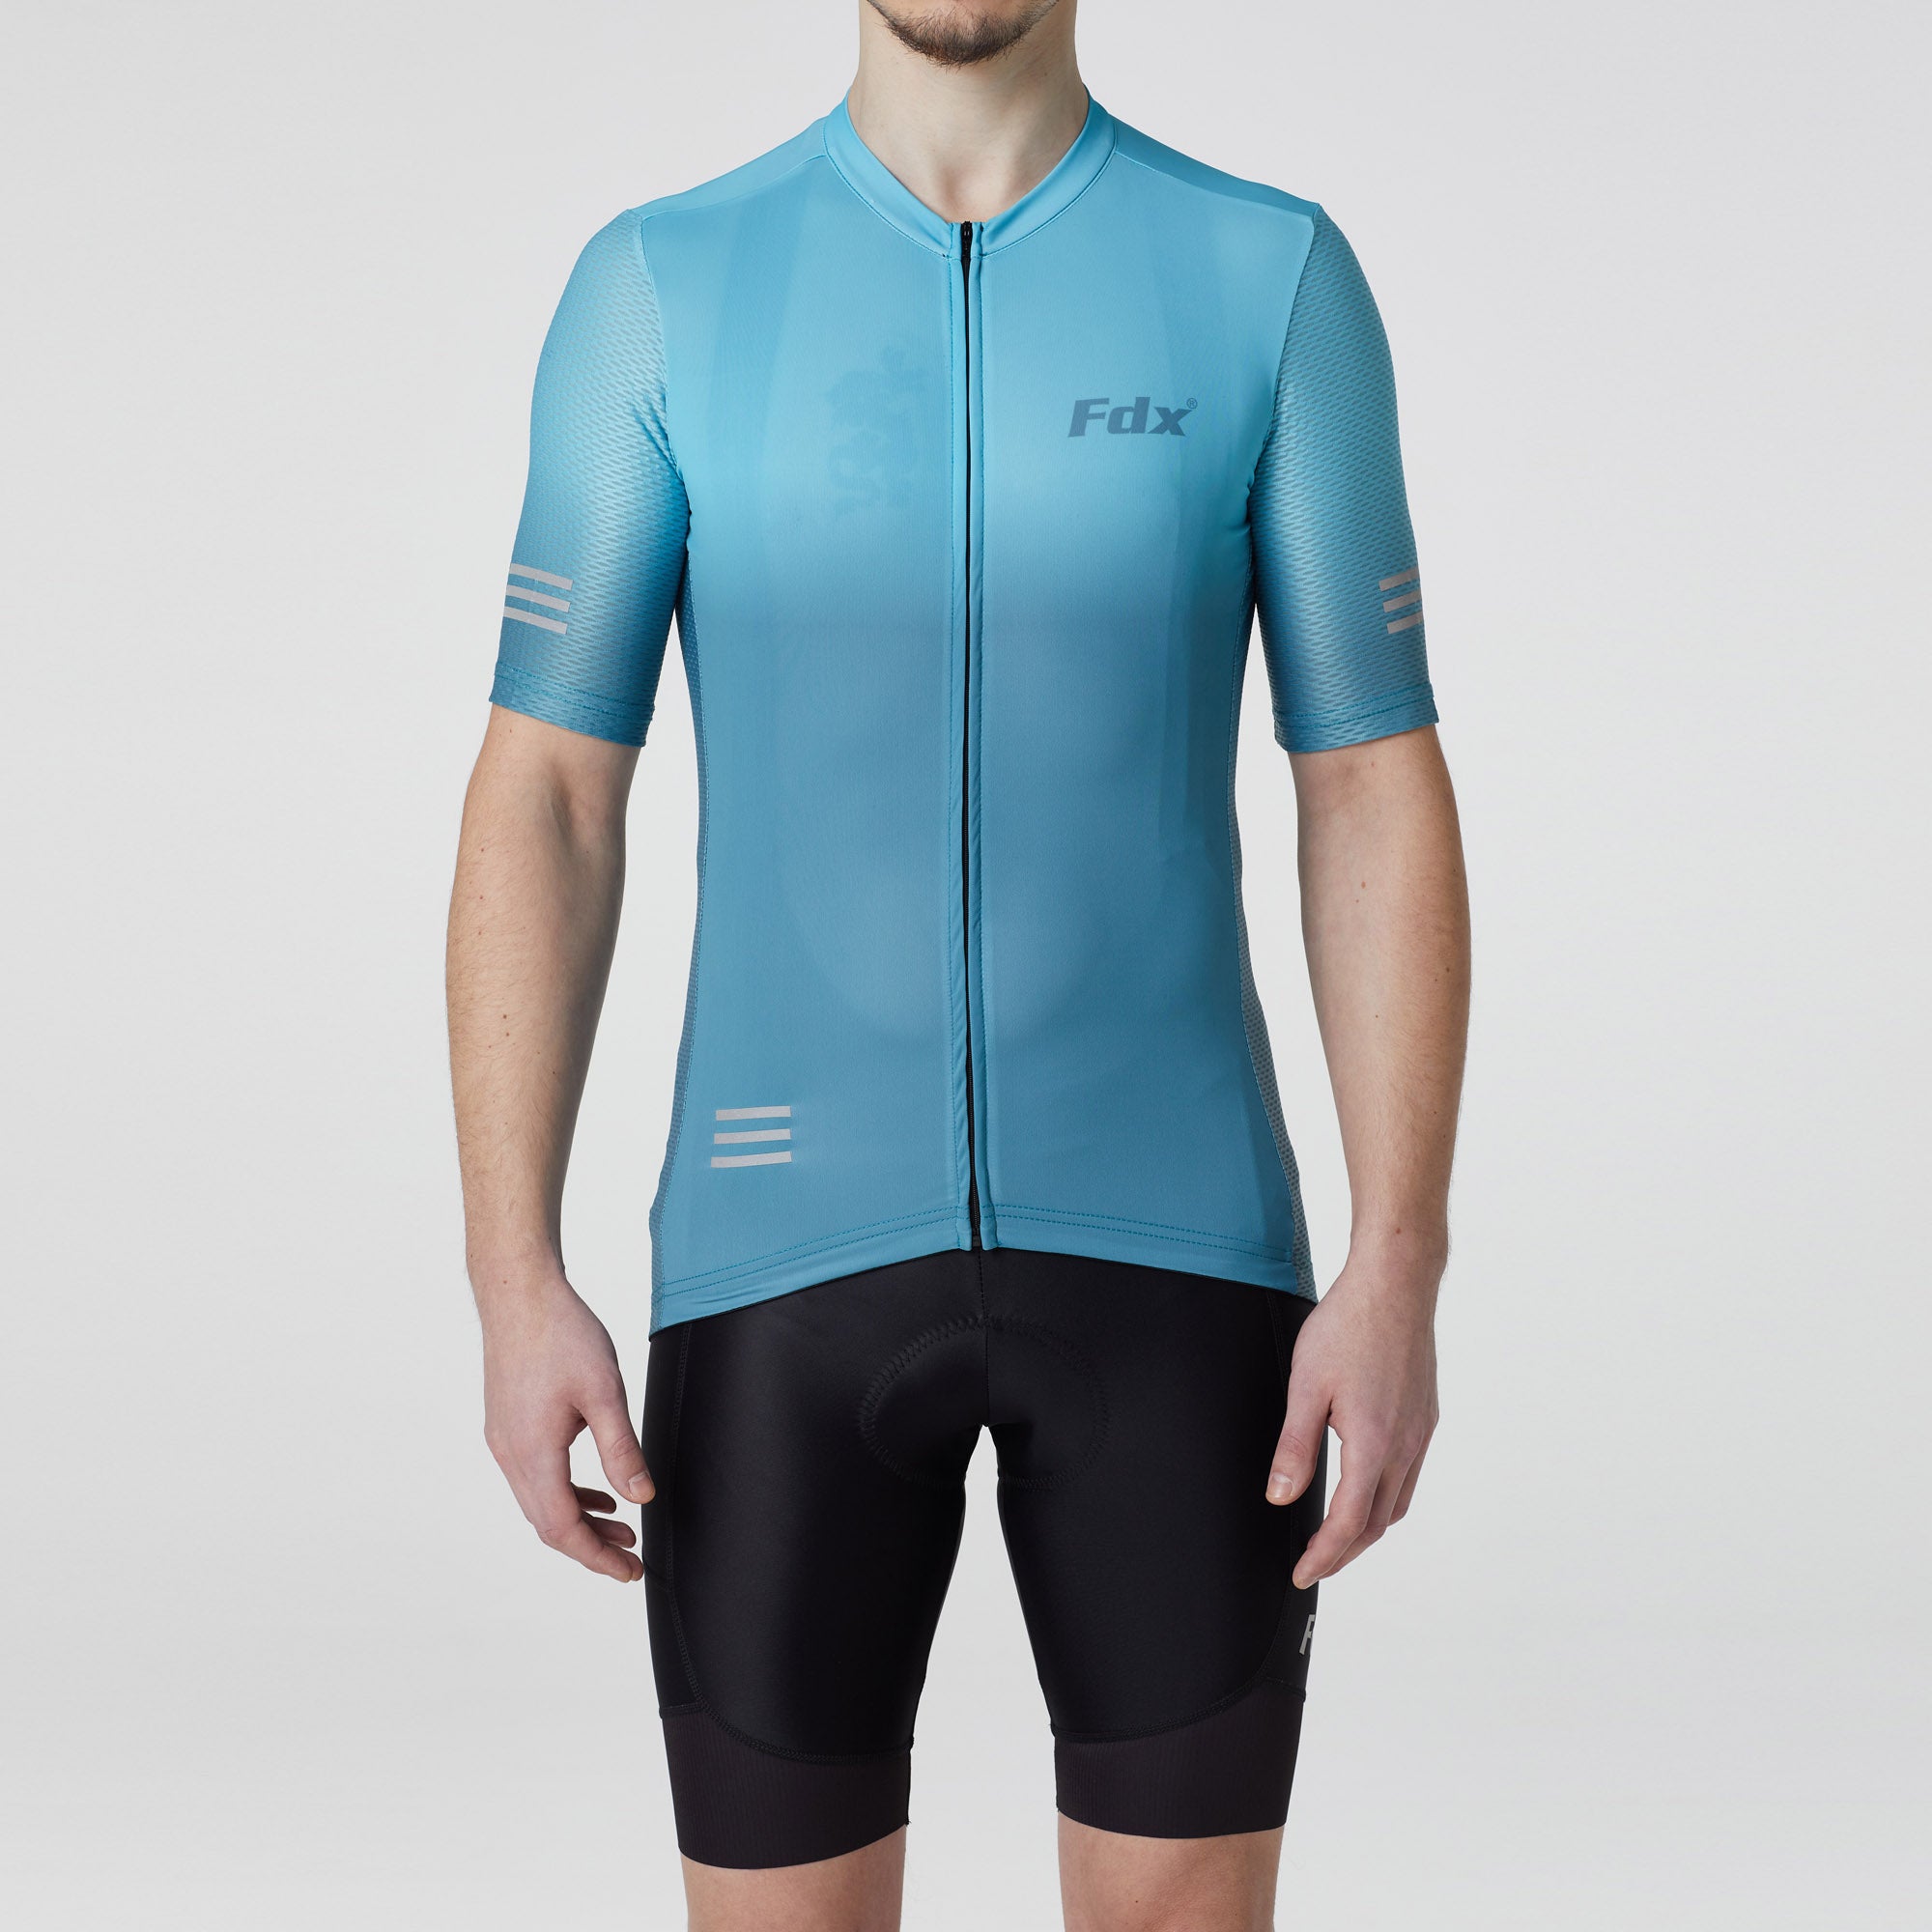 Fdx Mens Blue Short Sleeve Cycling Jersey & Gel Padded Bib Shorts Best Summer Road Bike Wear Light Weight, Hi-viz Reflectors & Pockets - Duo